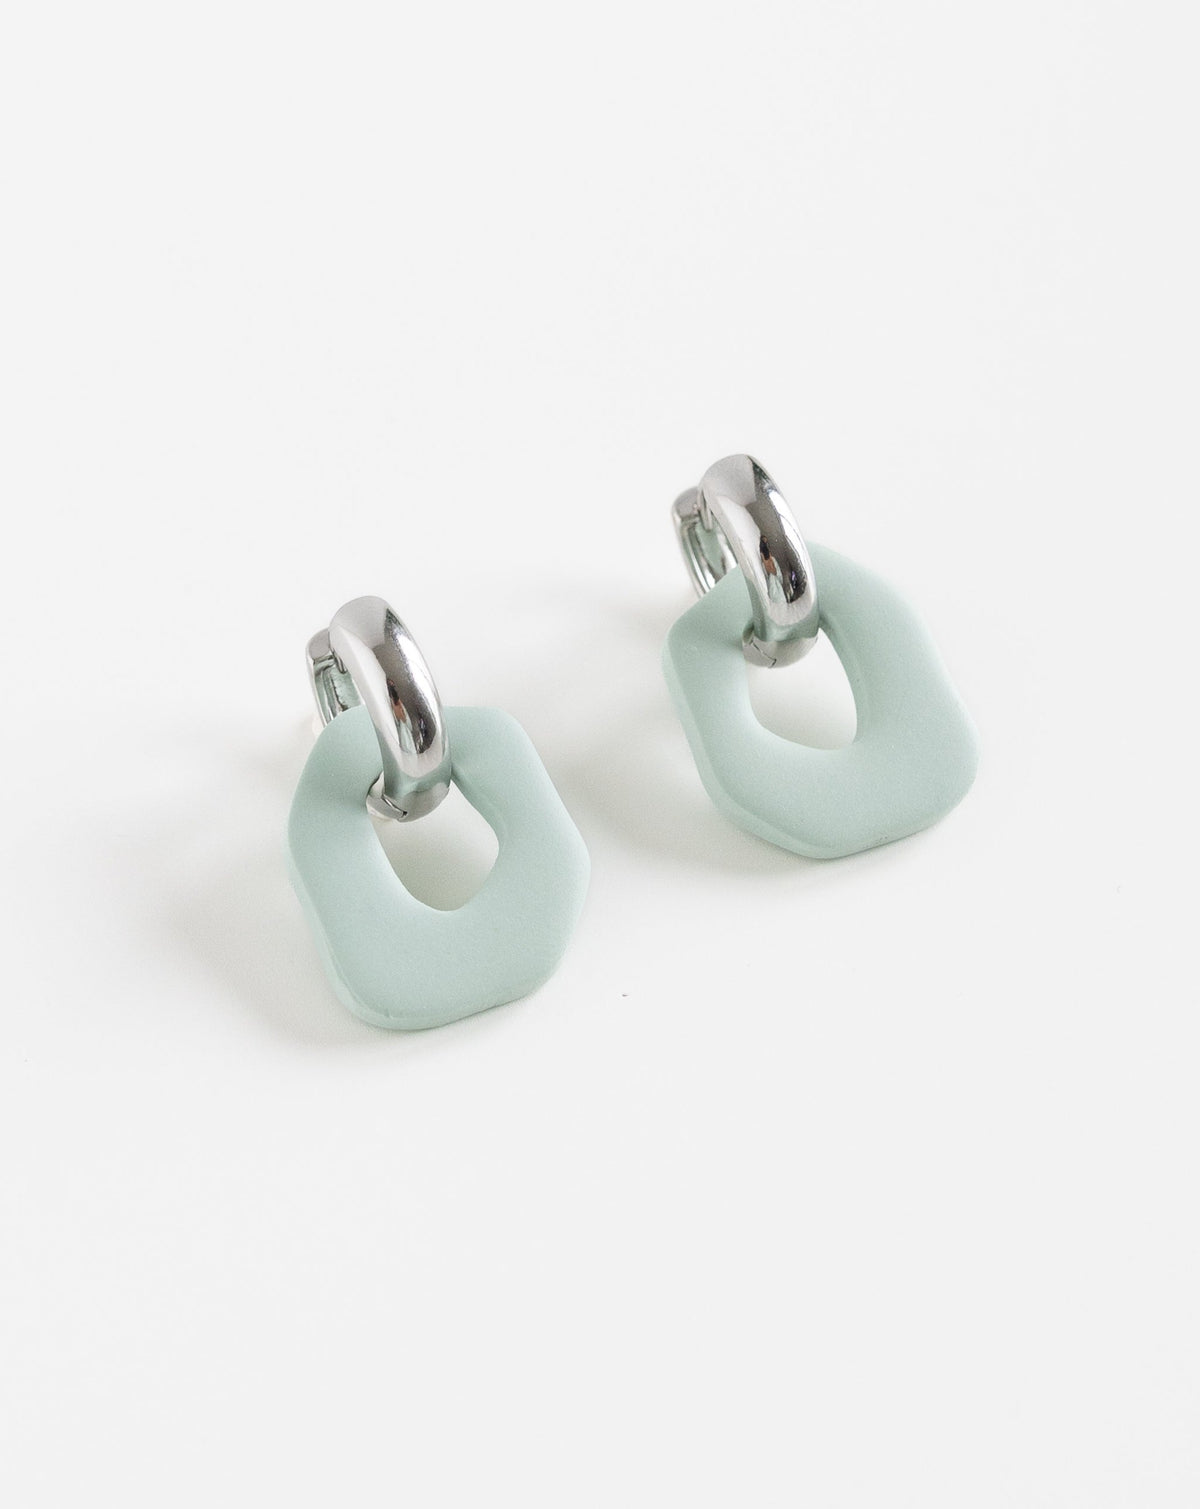 Darien earrings in Sage color with silver hoops, side view